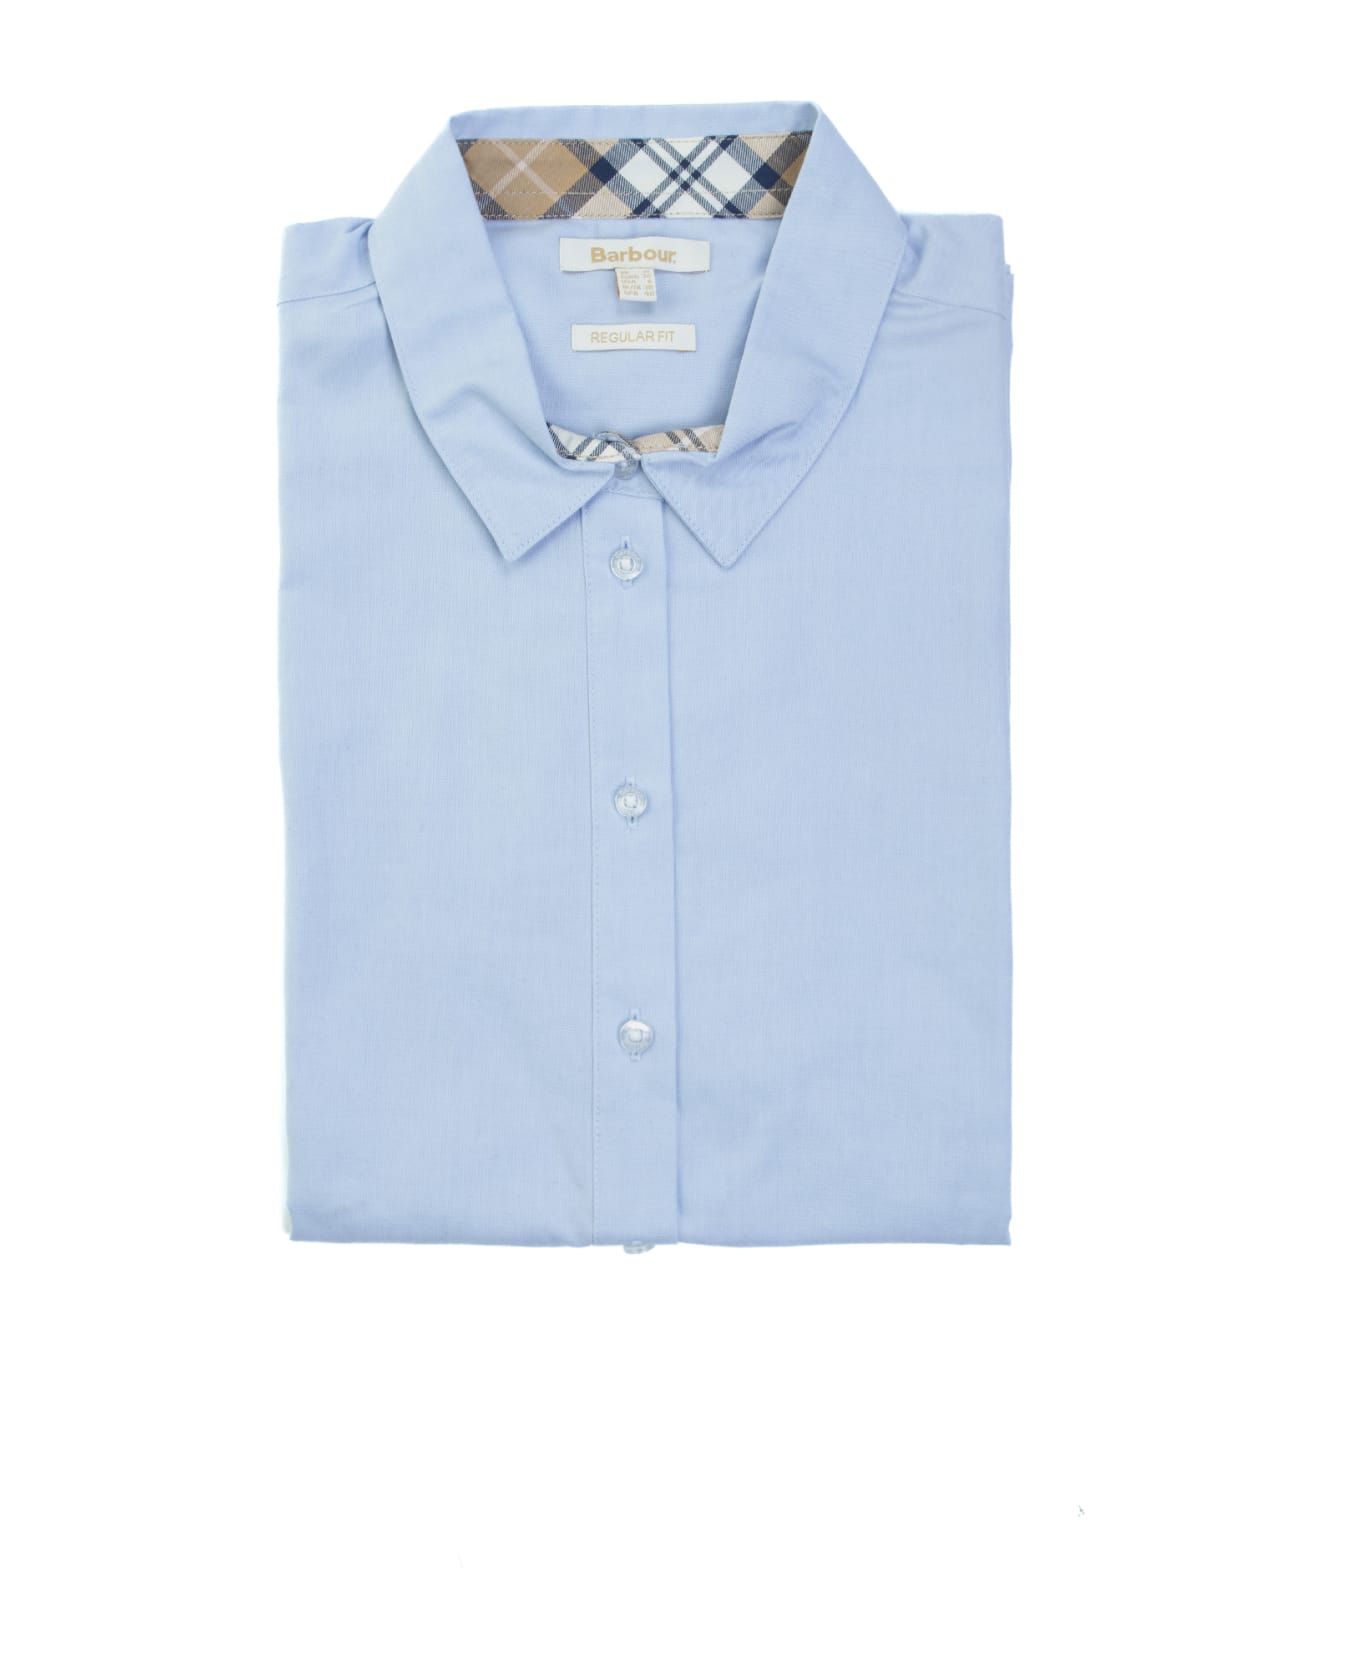 Barbour Derwent Shirt Light Blue - PALE BLUE/PRIMROSE HESSIAN